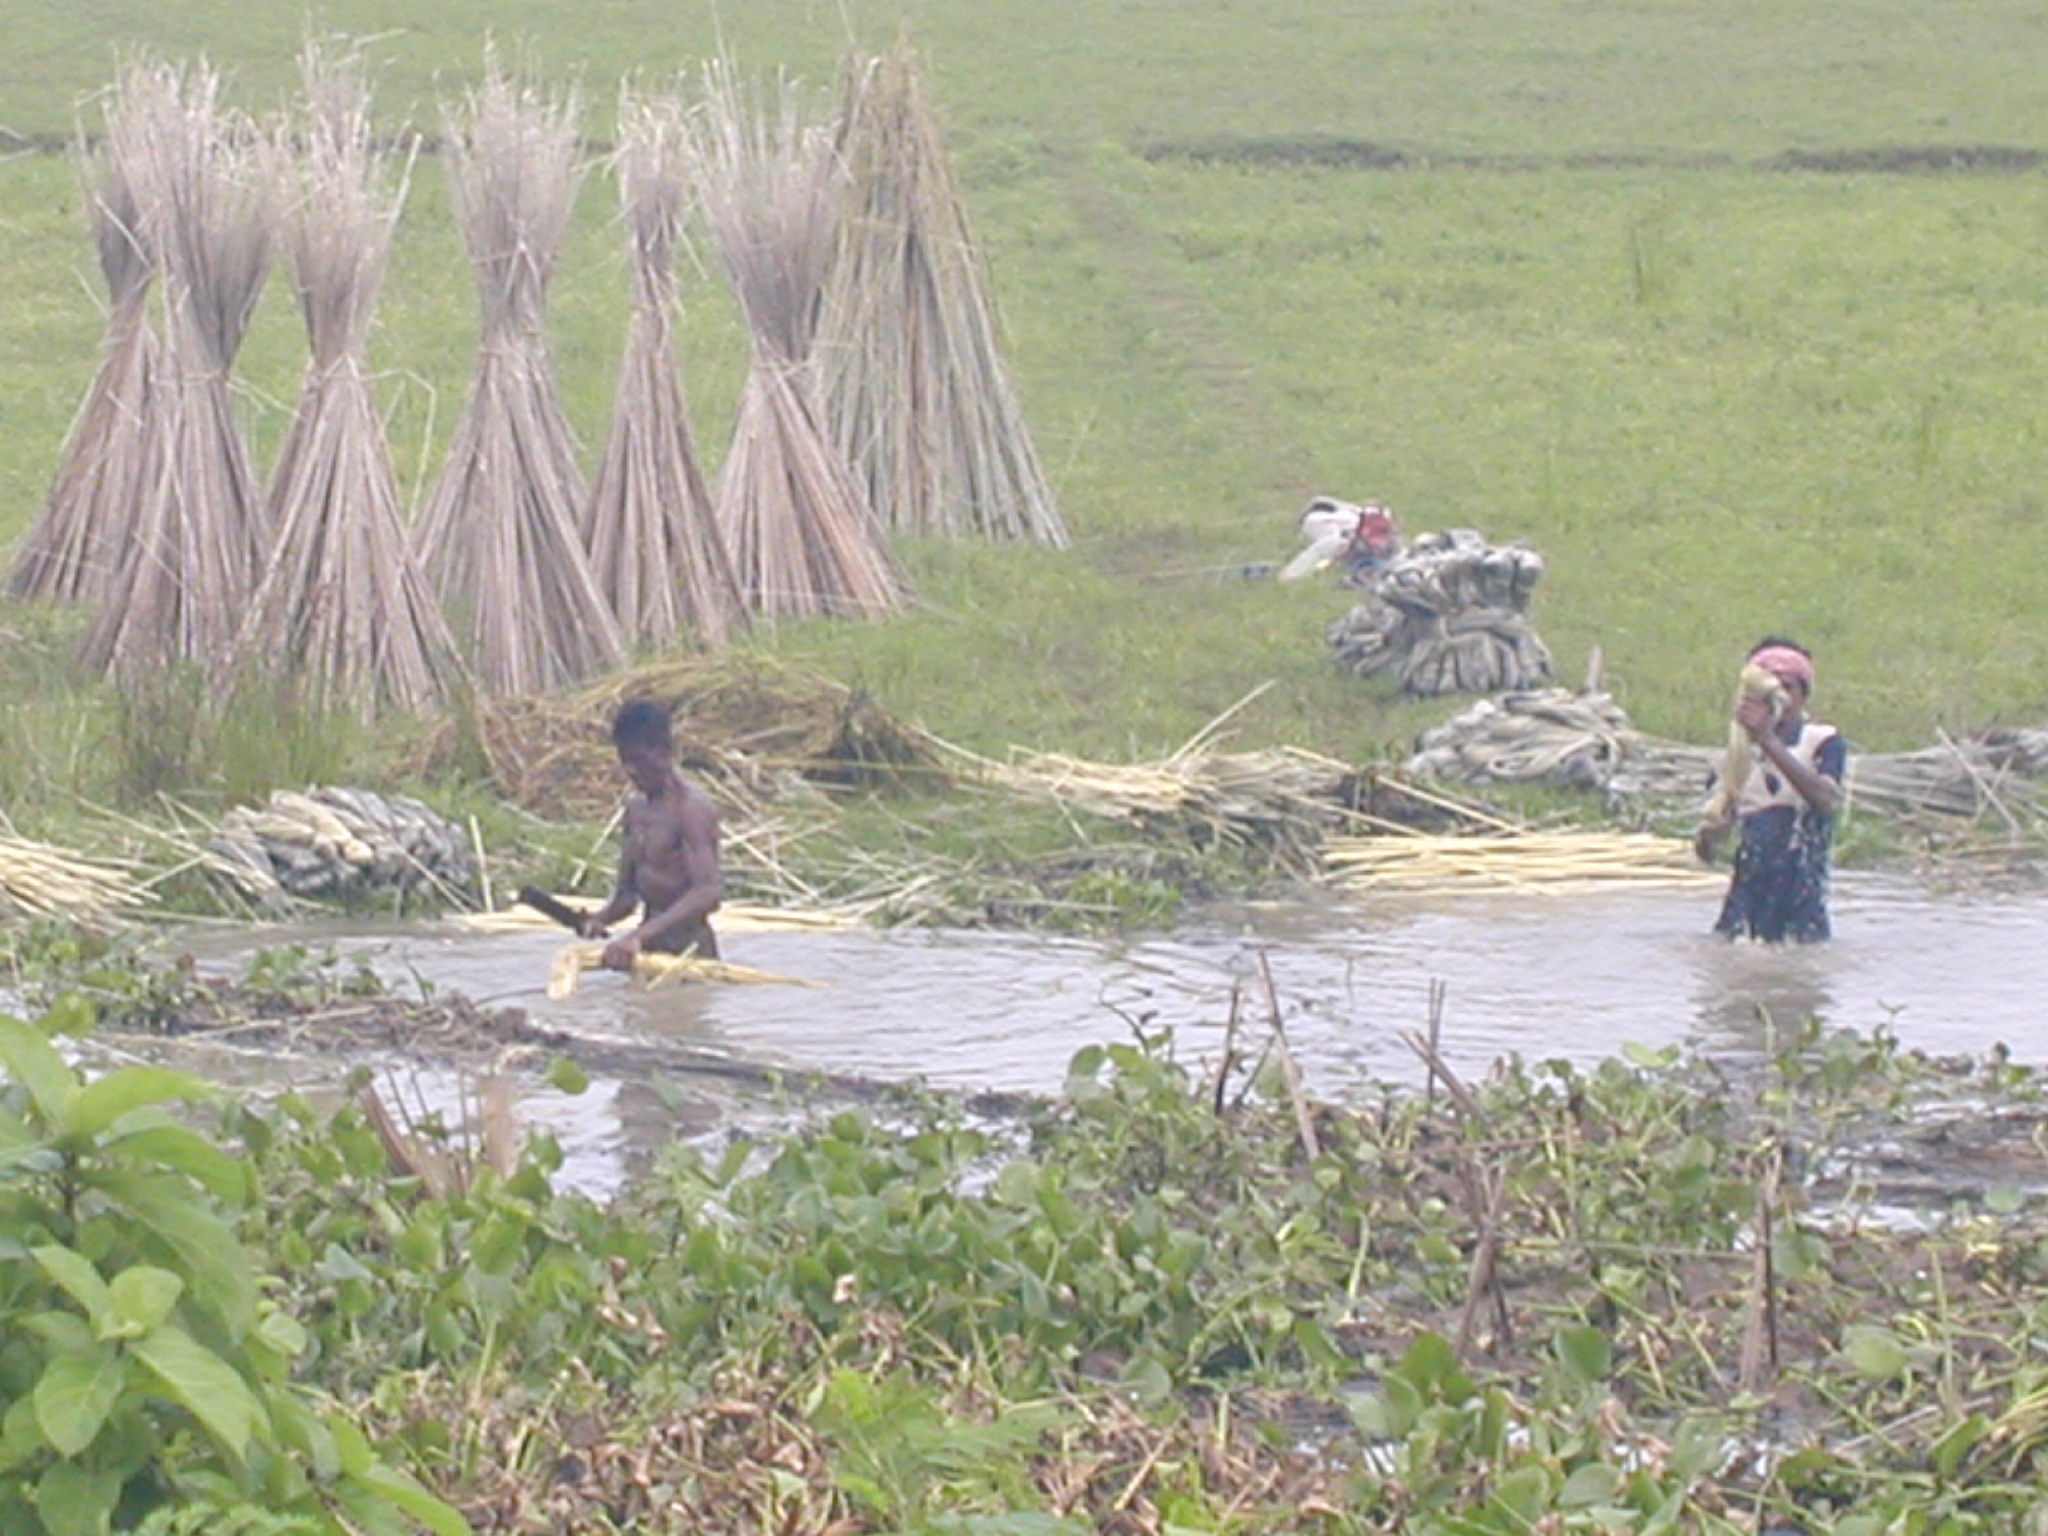 People harvesting Jute outside of Kolkata 